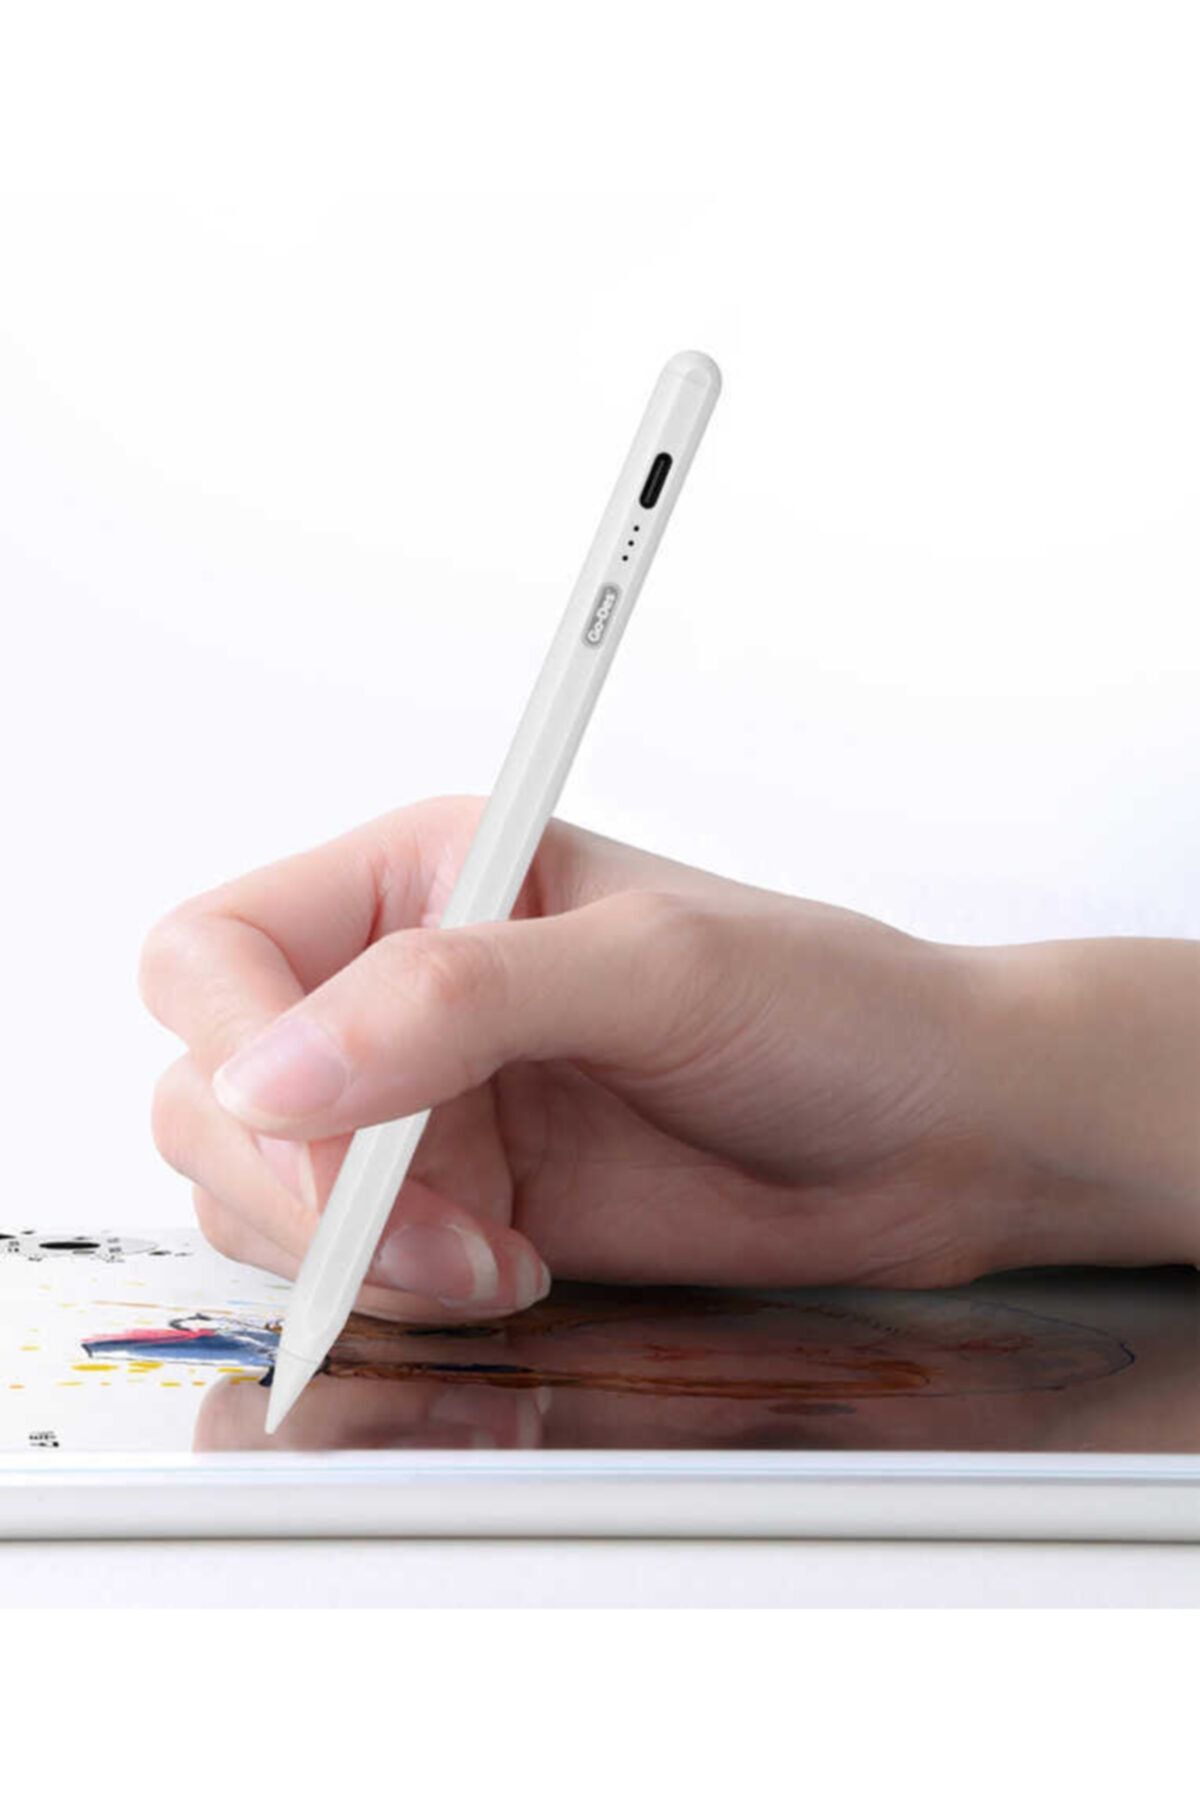 Apple Ipad Pro 12.9 Inç (4. Nesil) Dokunmatik Kalem Hassas Çizim Ve Not Tutmak Için Palm Free Özellikli